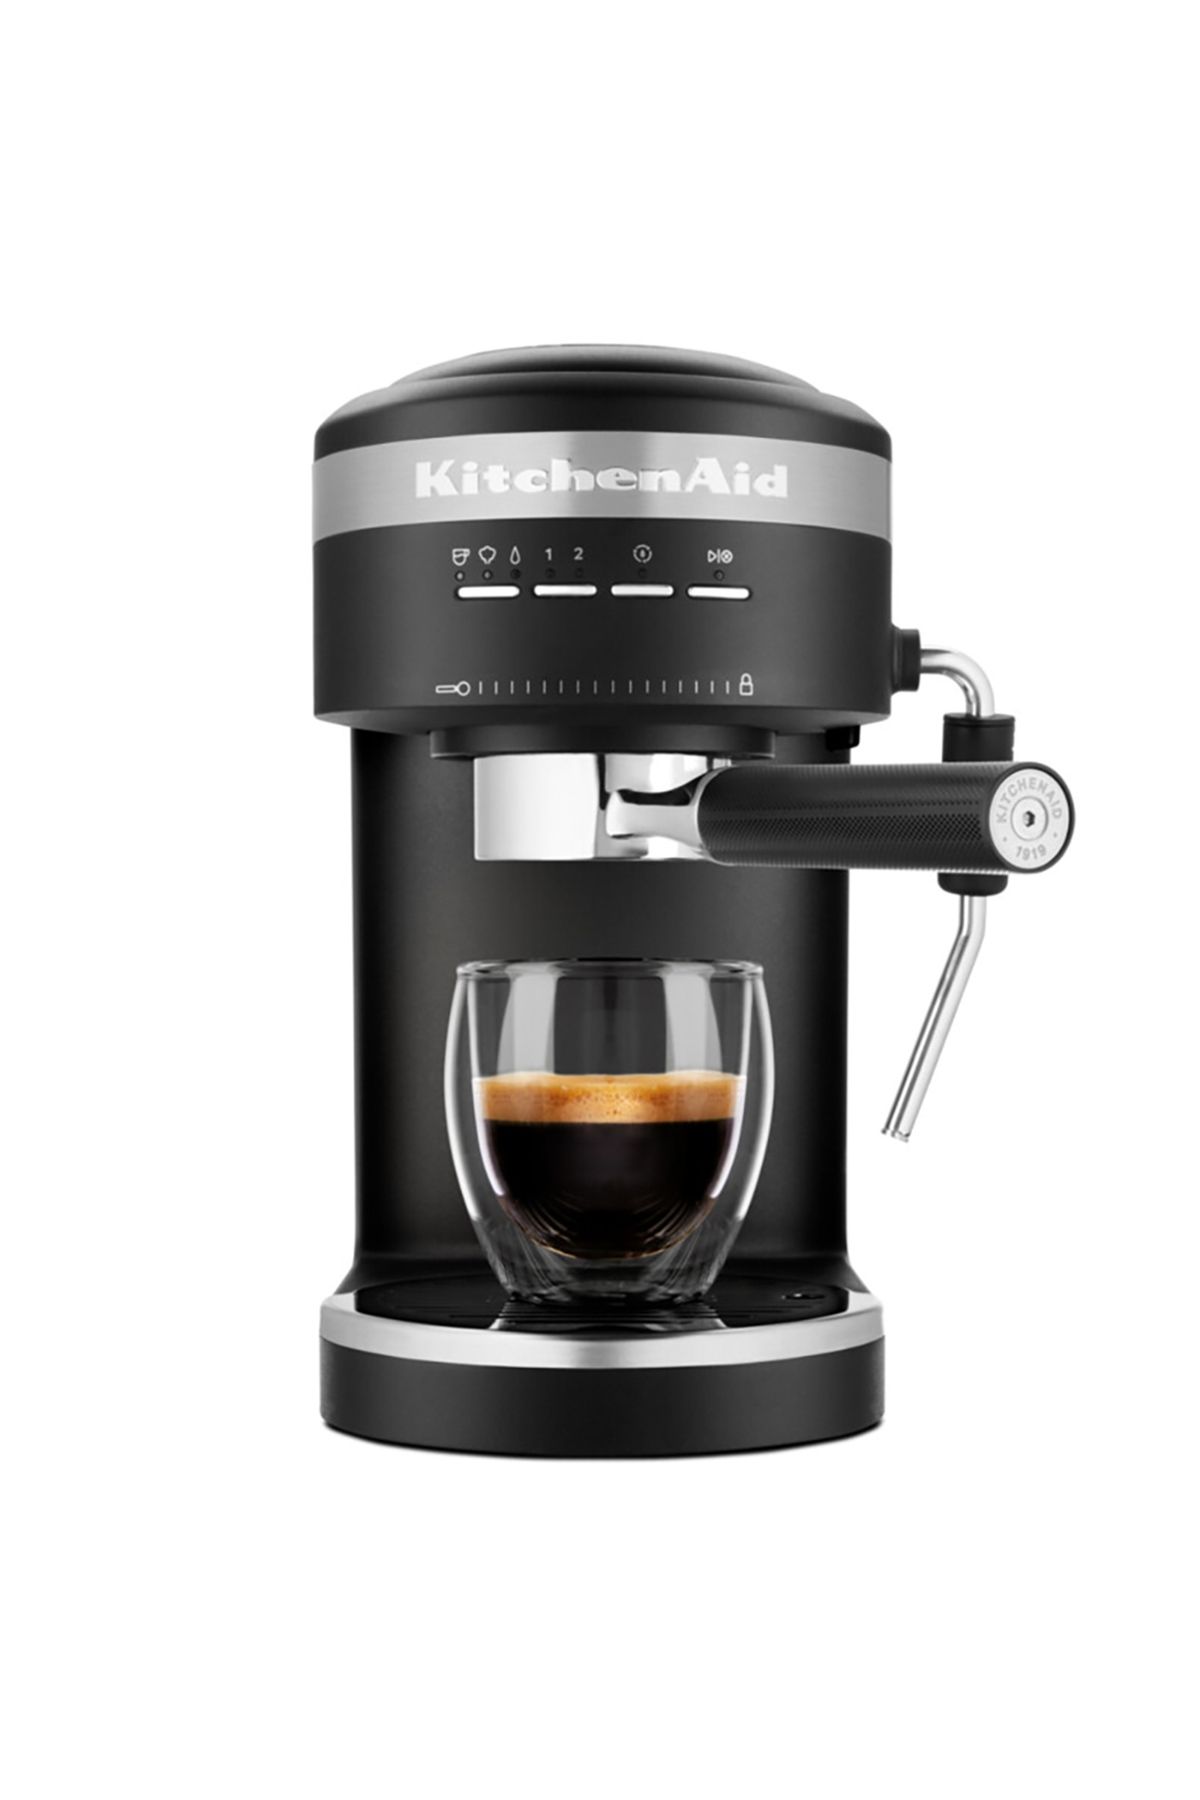 Kitchenaid Espresso Makinesi – 5kes6403